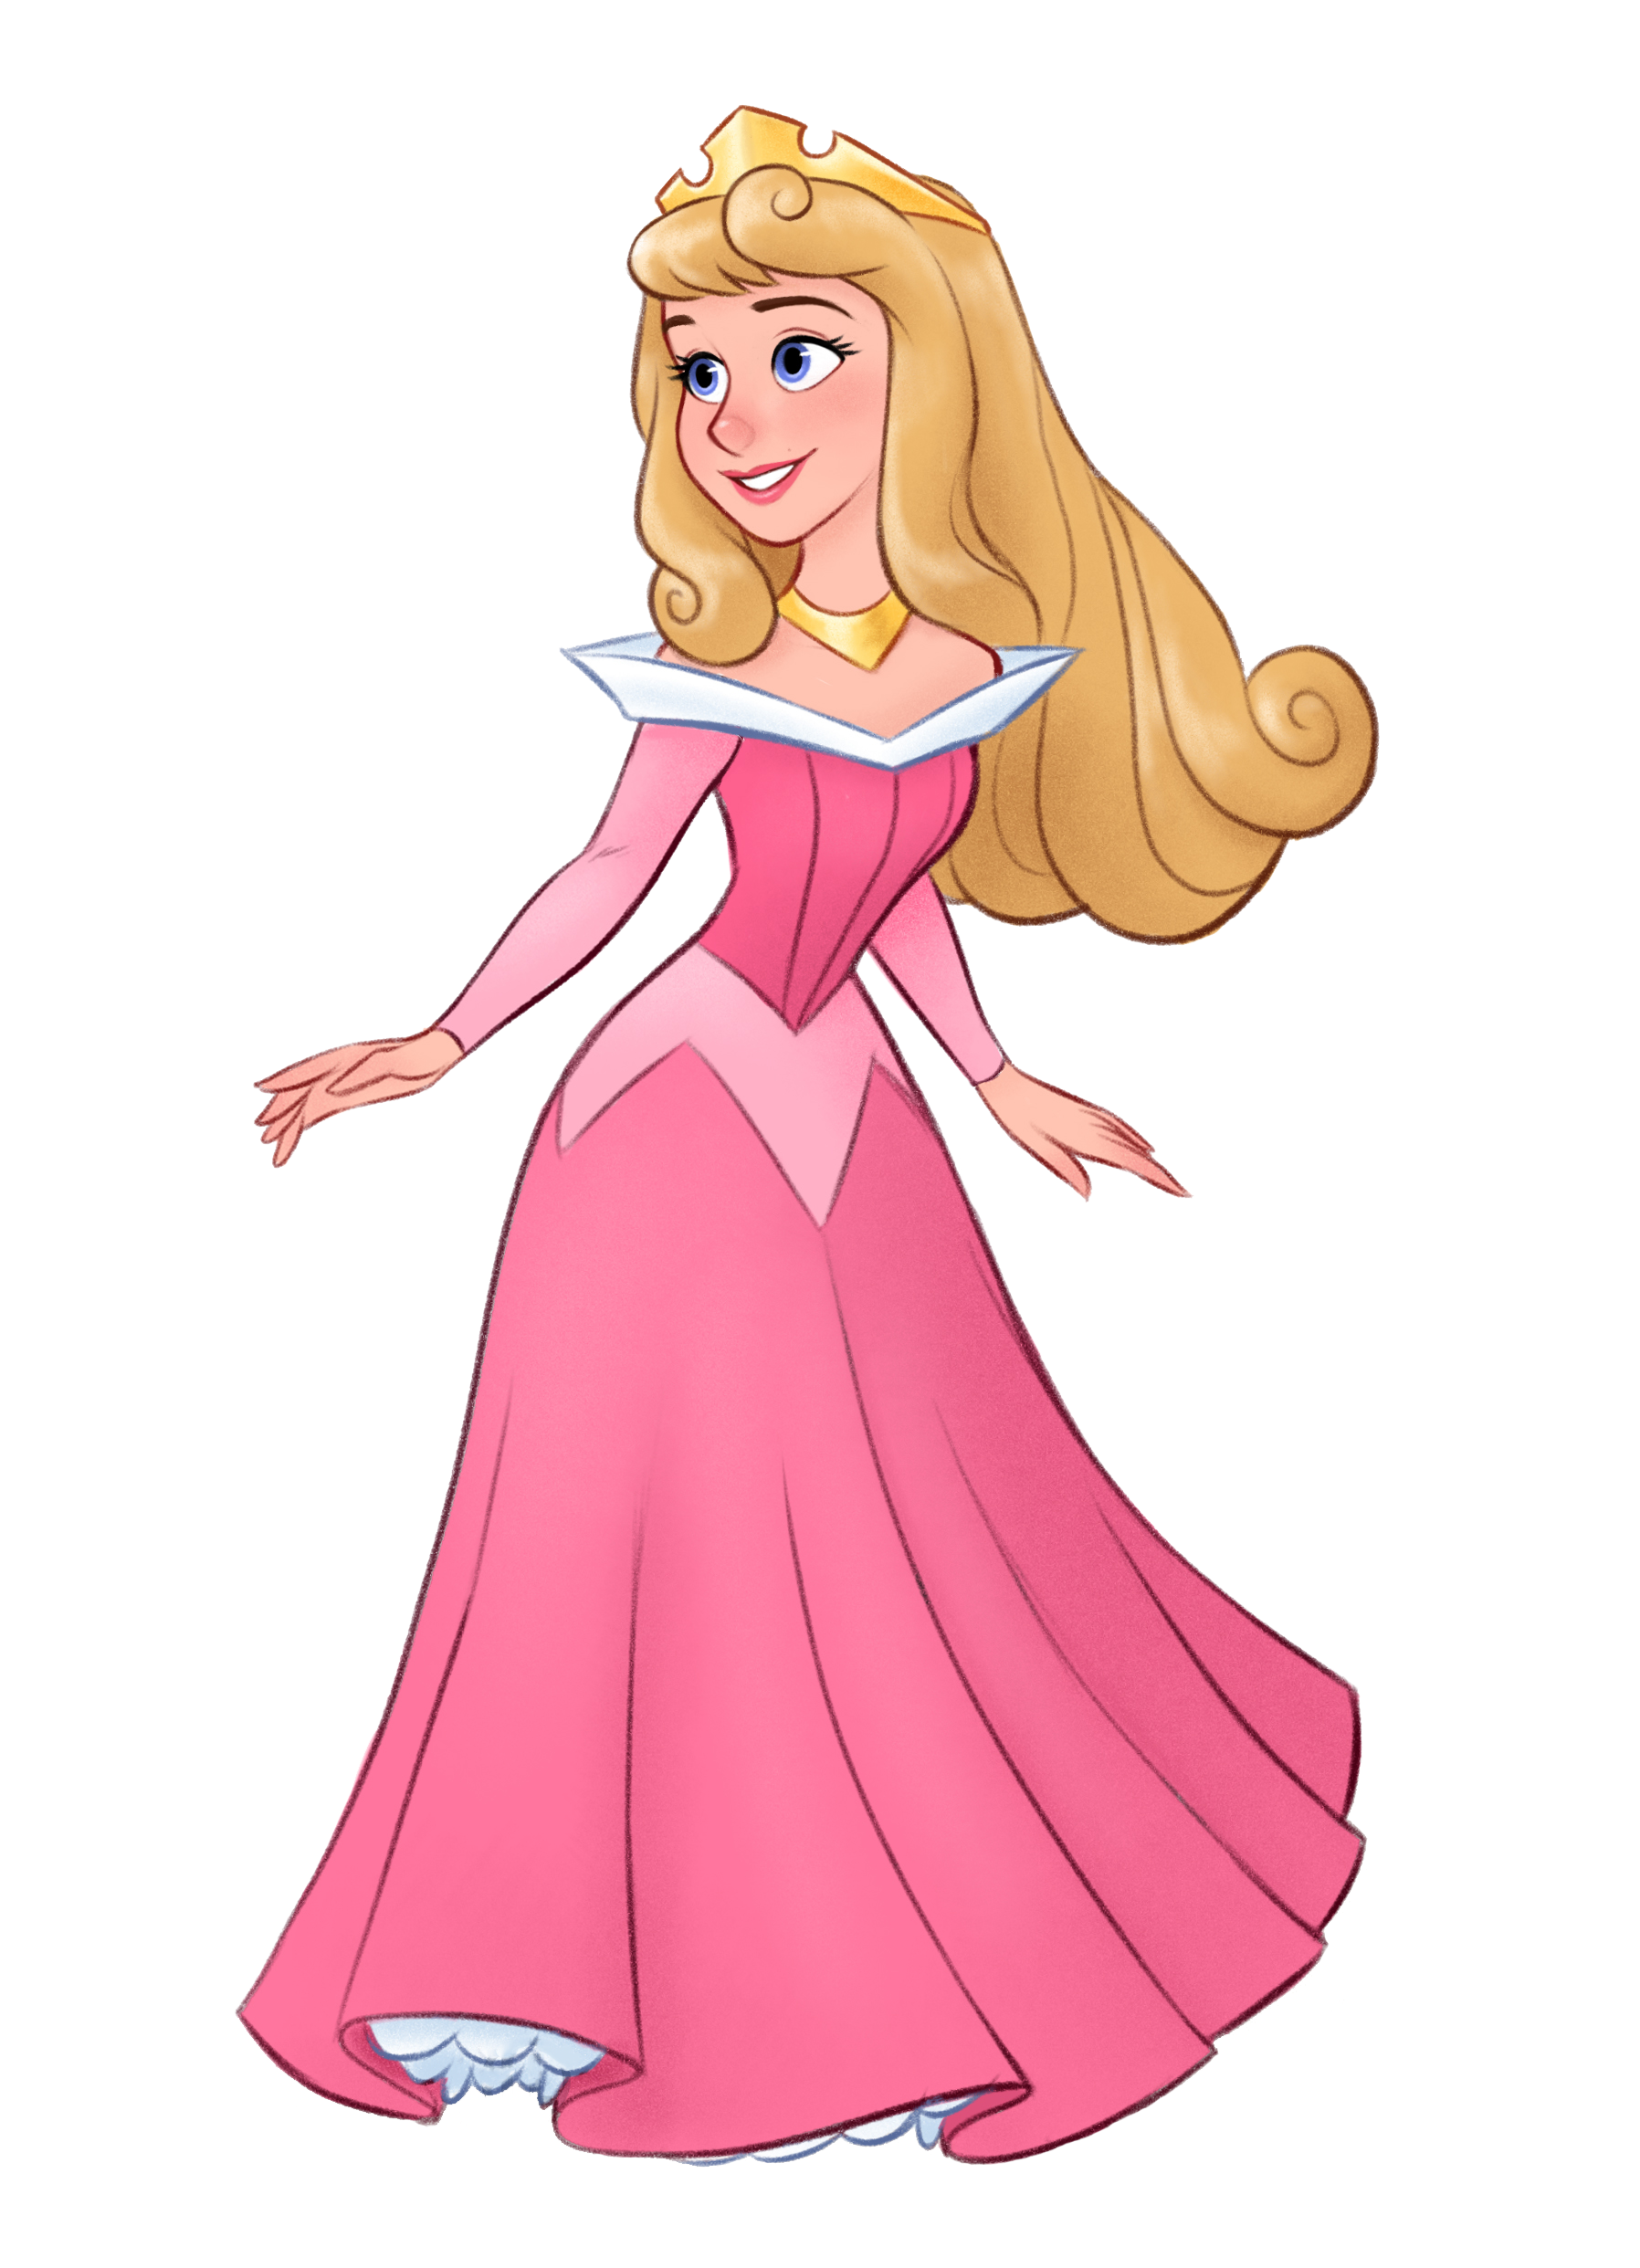 This visual is about disney princess princesa disneyprincess aurora freetoe...